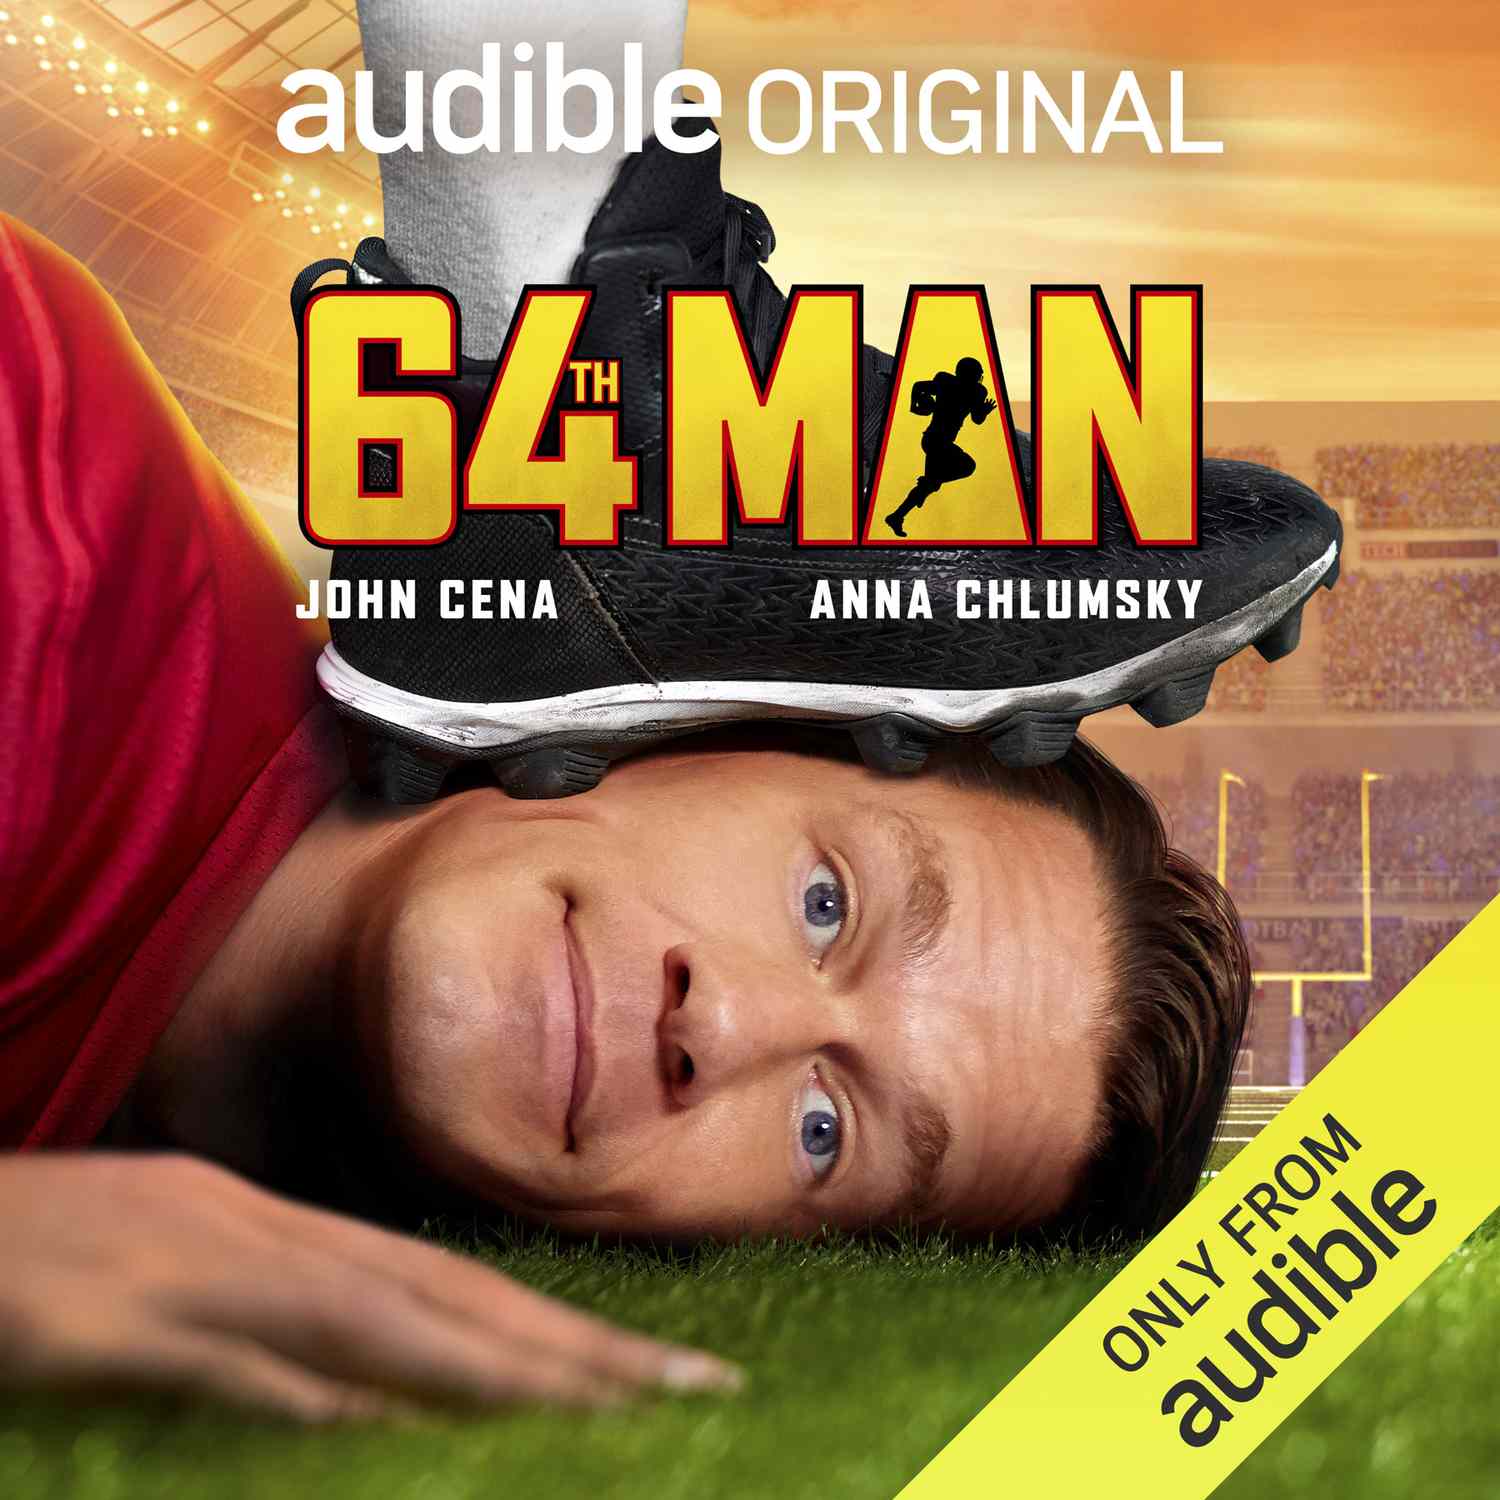 64th Man key art John Cena CR: Audible